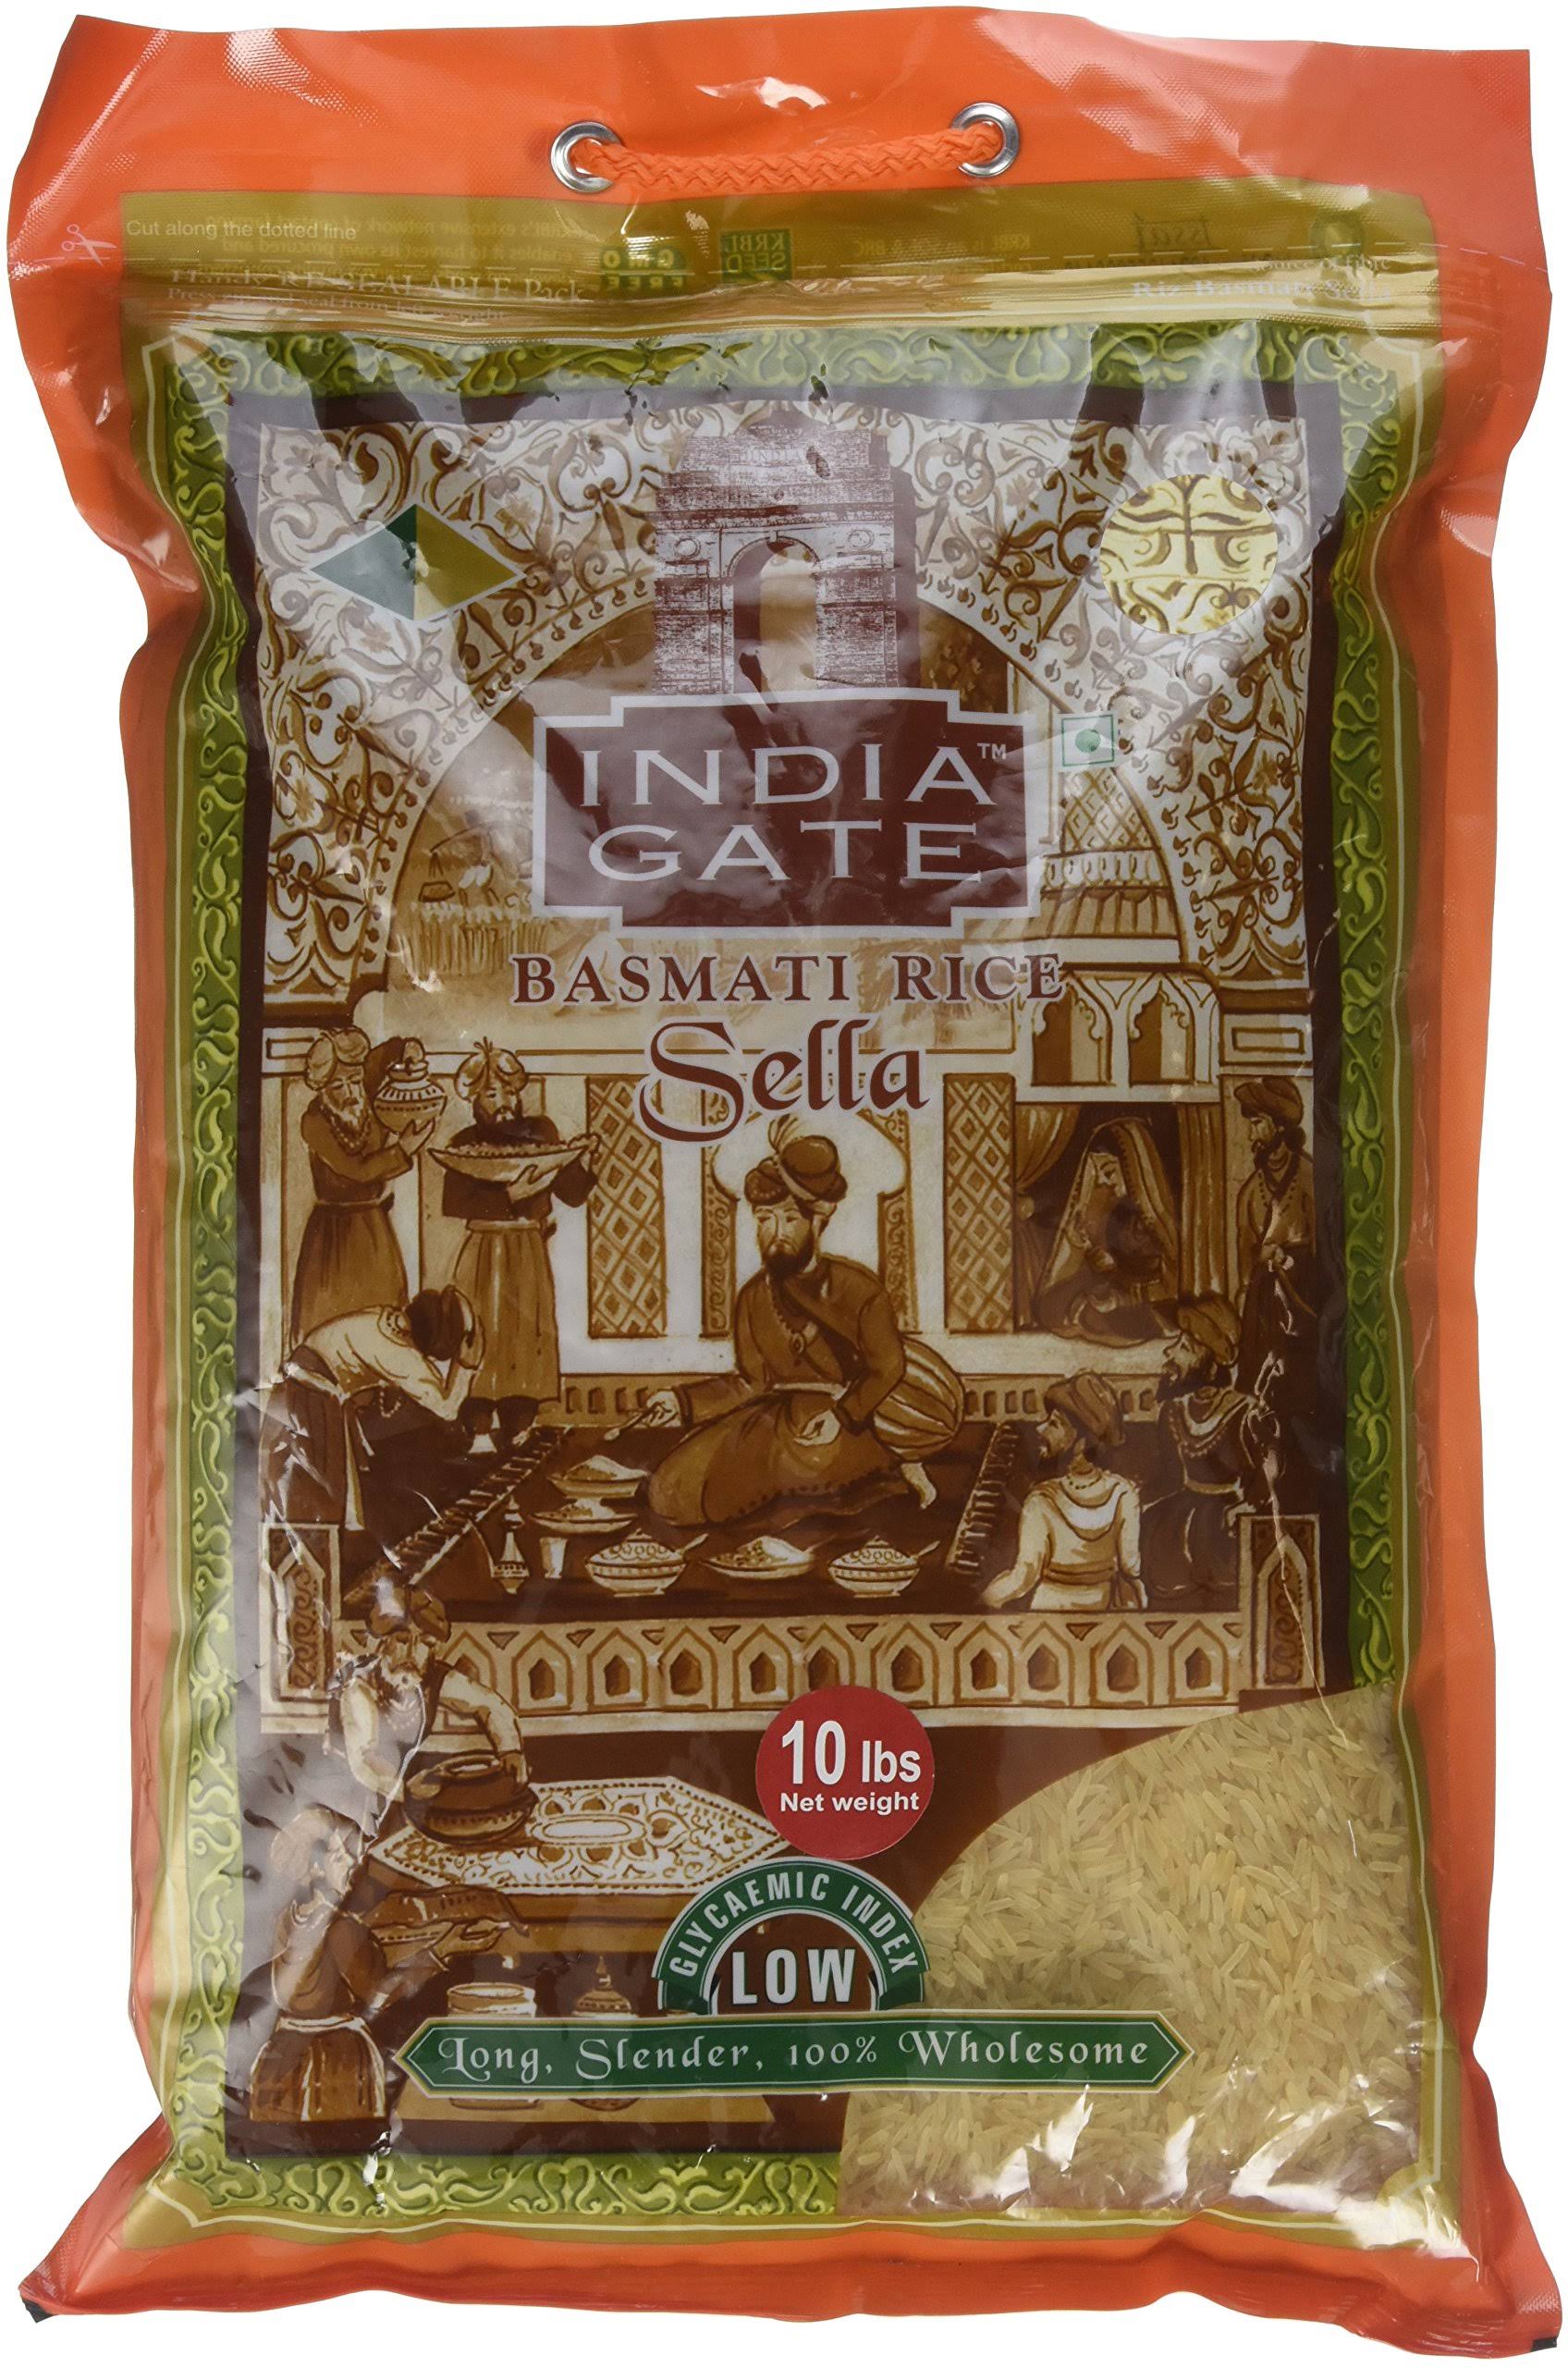 India Gate Parboiled Basmati Rice - Golden Sella, 10lbs